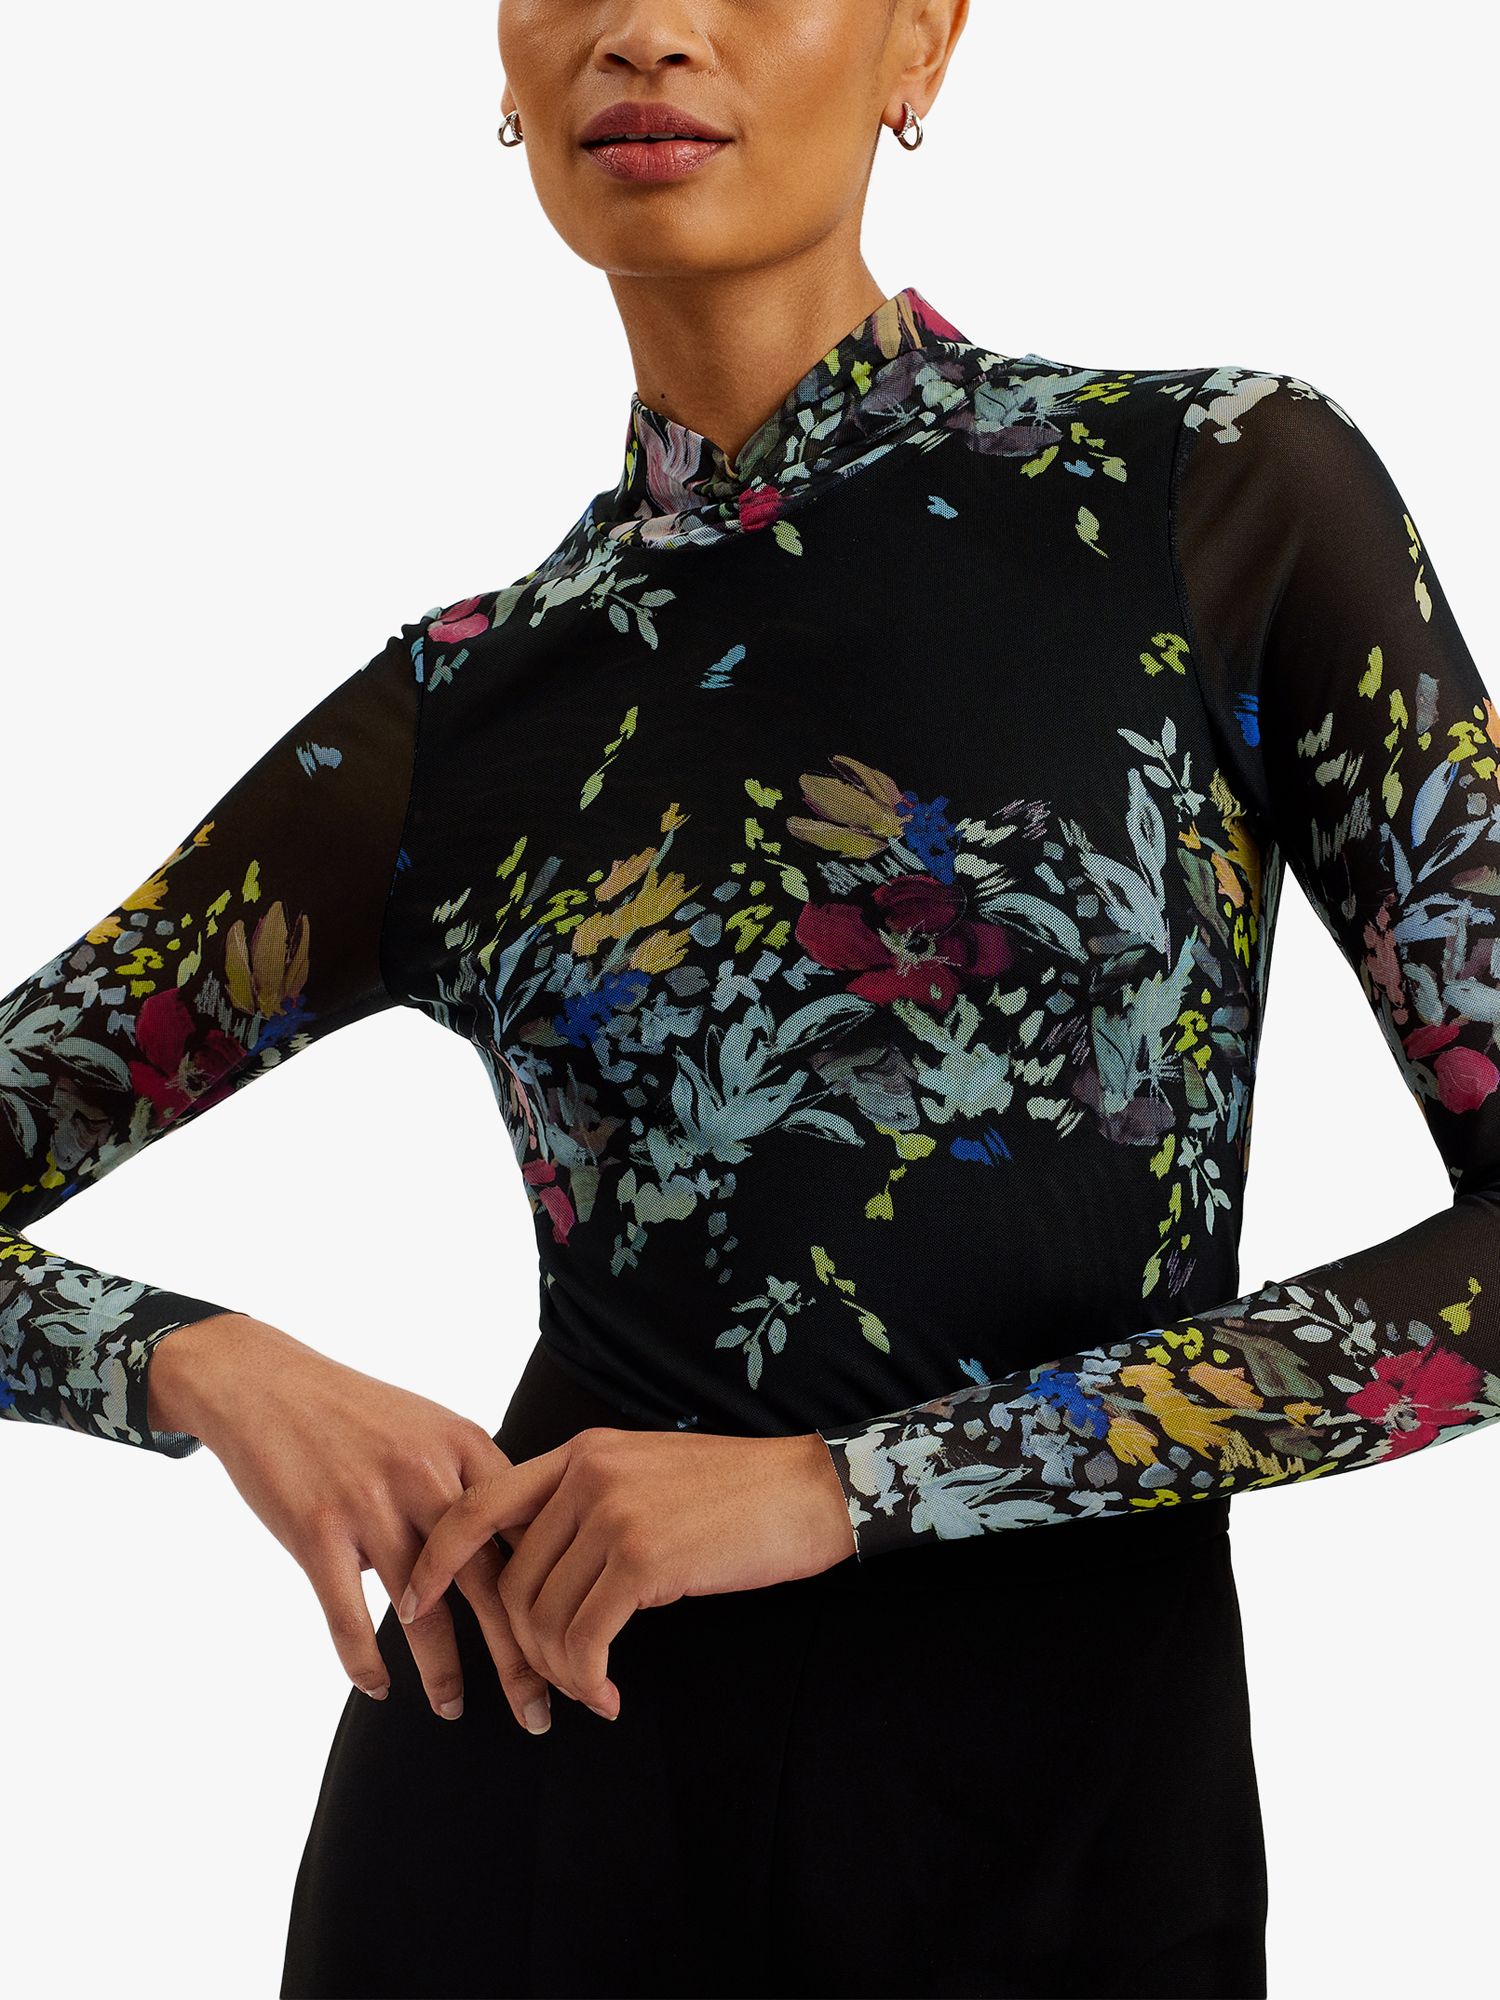 J.Jill Size Medium Black Floral Long Sleeve Top – Best Friends